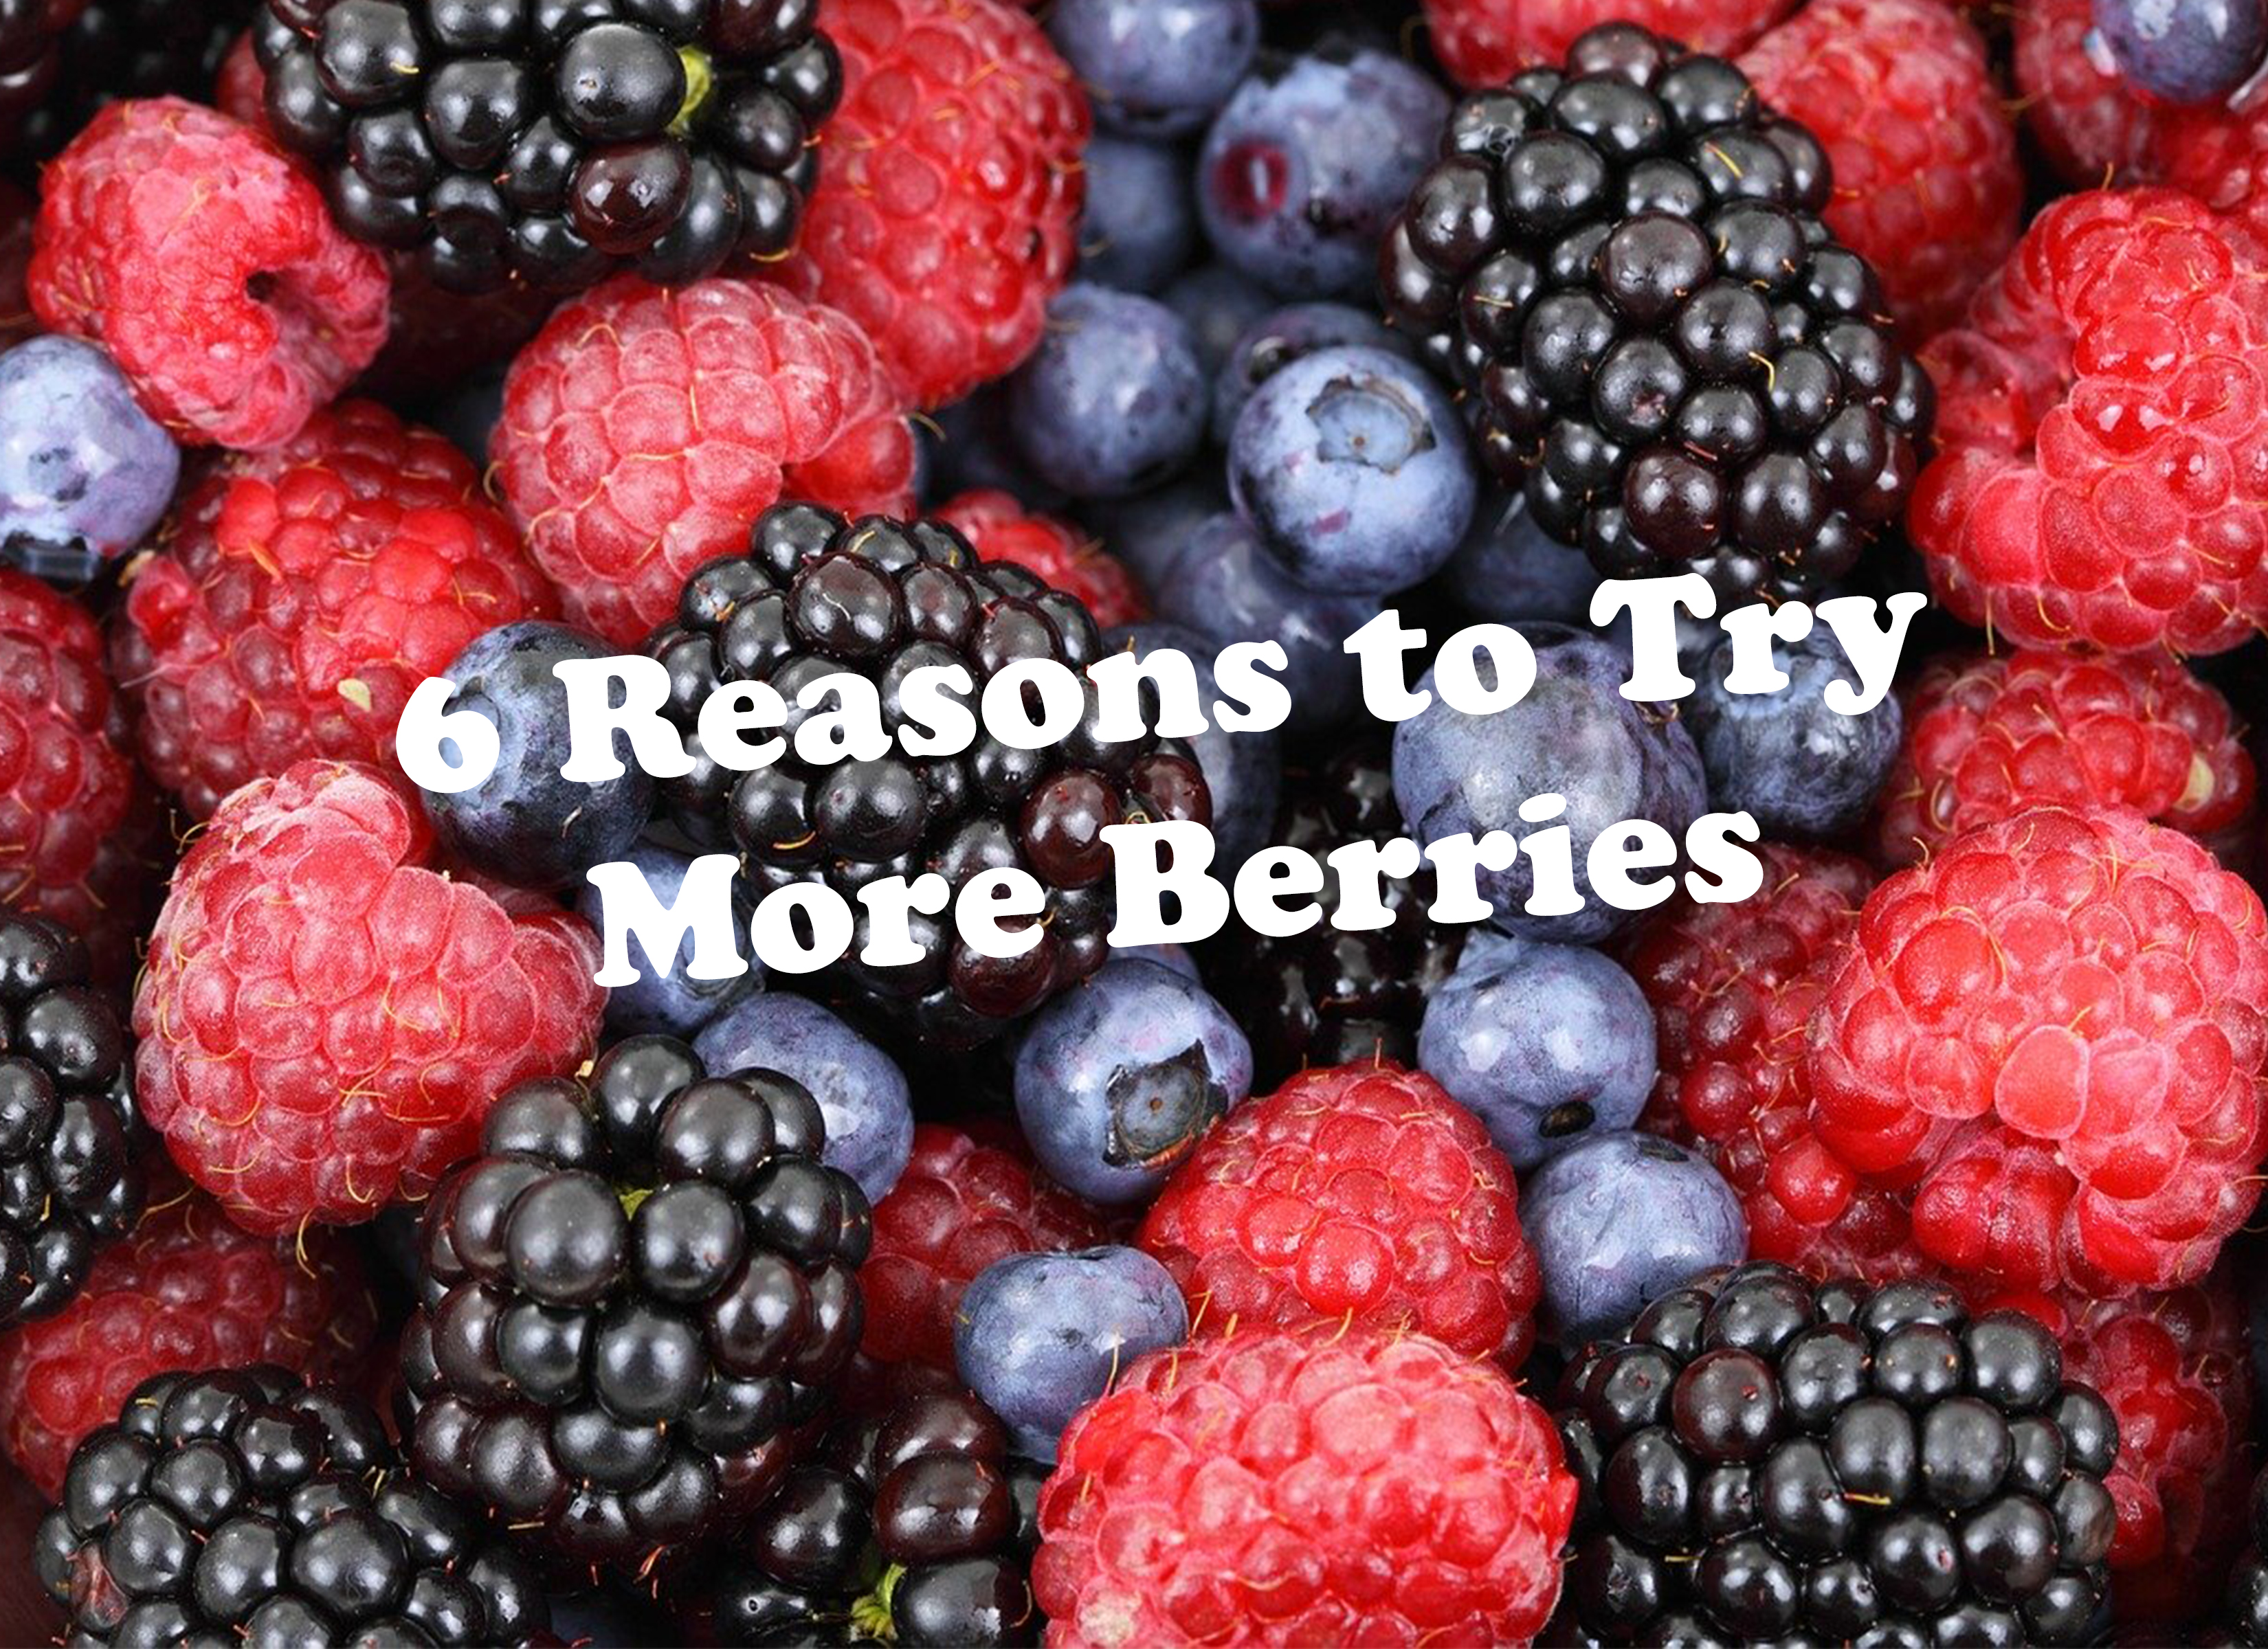 6 Reasons to Eat More Berries